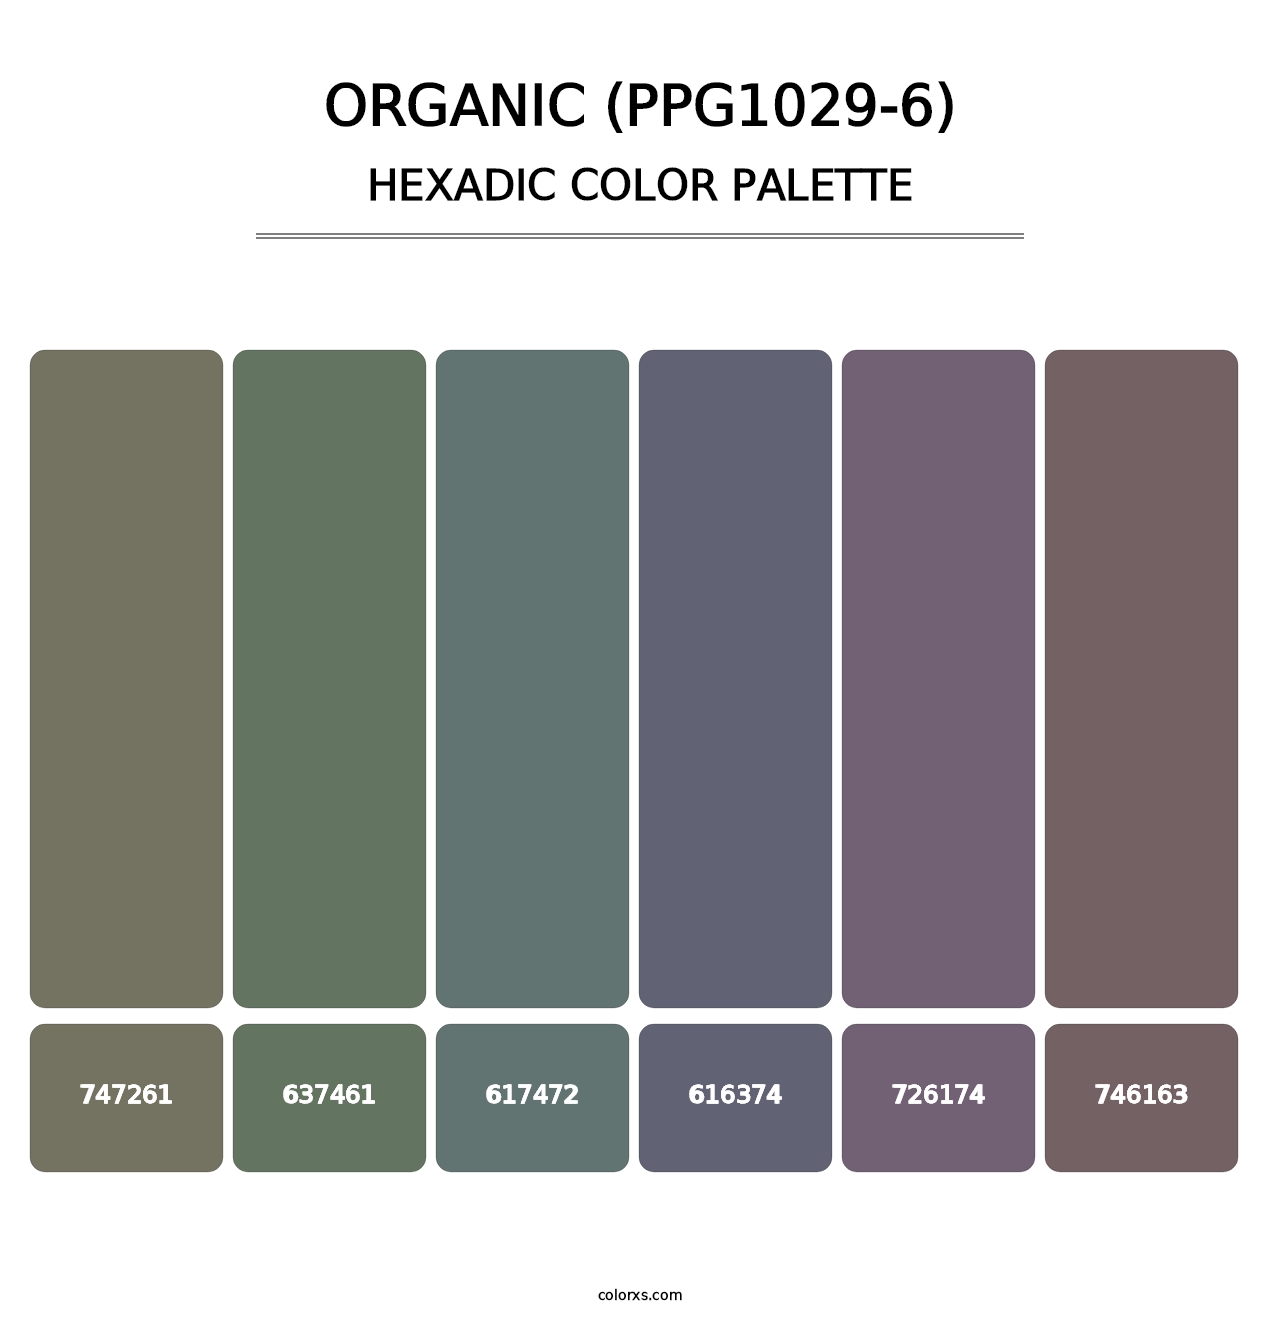 Organic (PPG1029-6) - Hexadic Color Palette